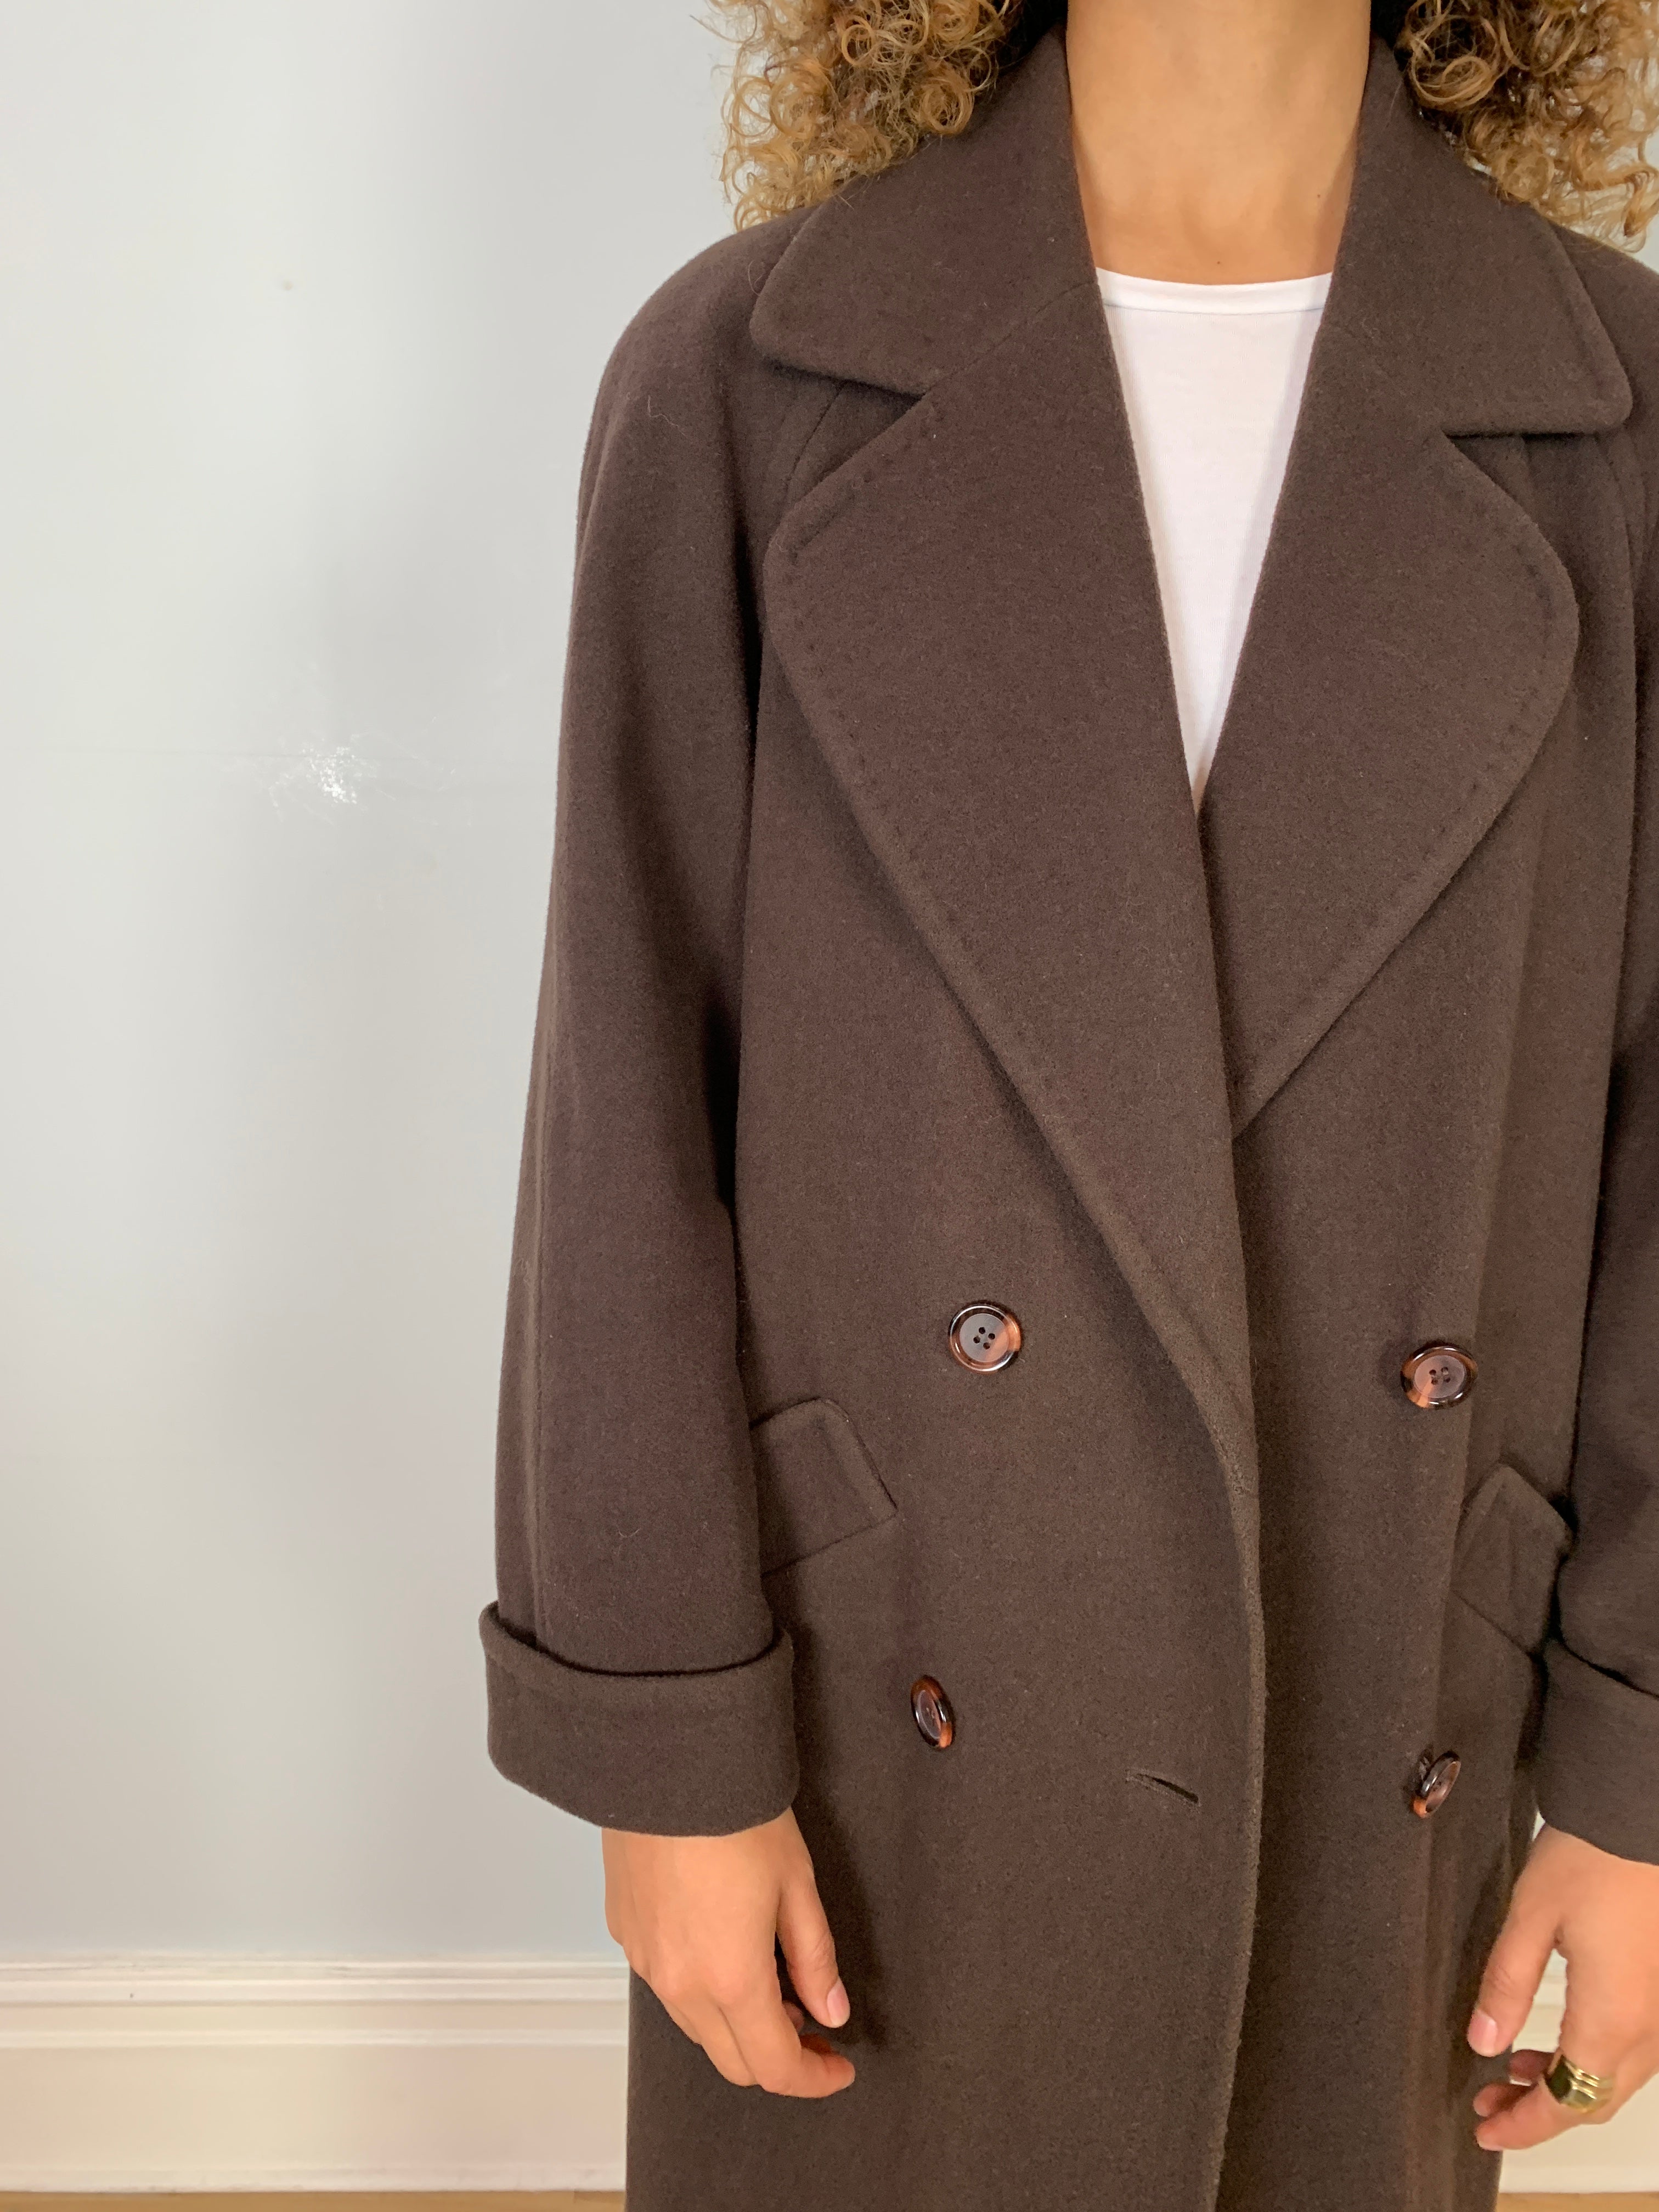 Vintage double breasted minimal wool coat